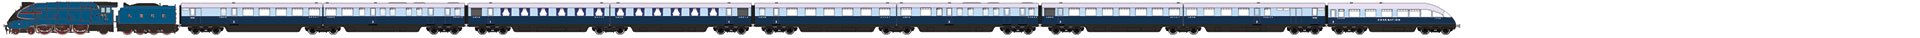 ECML - Potters Bar LNER Class A4 4-6-2 in LNER Garter blue livery hauling the LNER Coronation stock